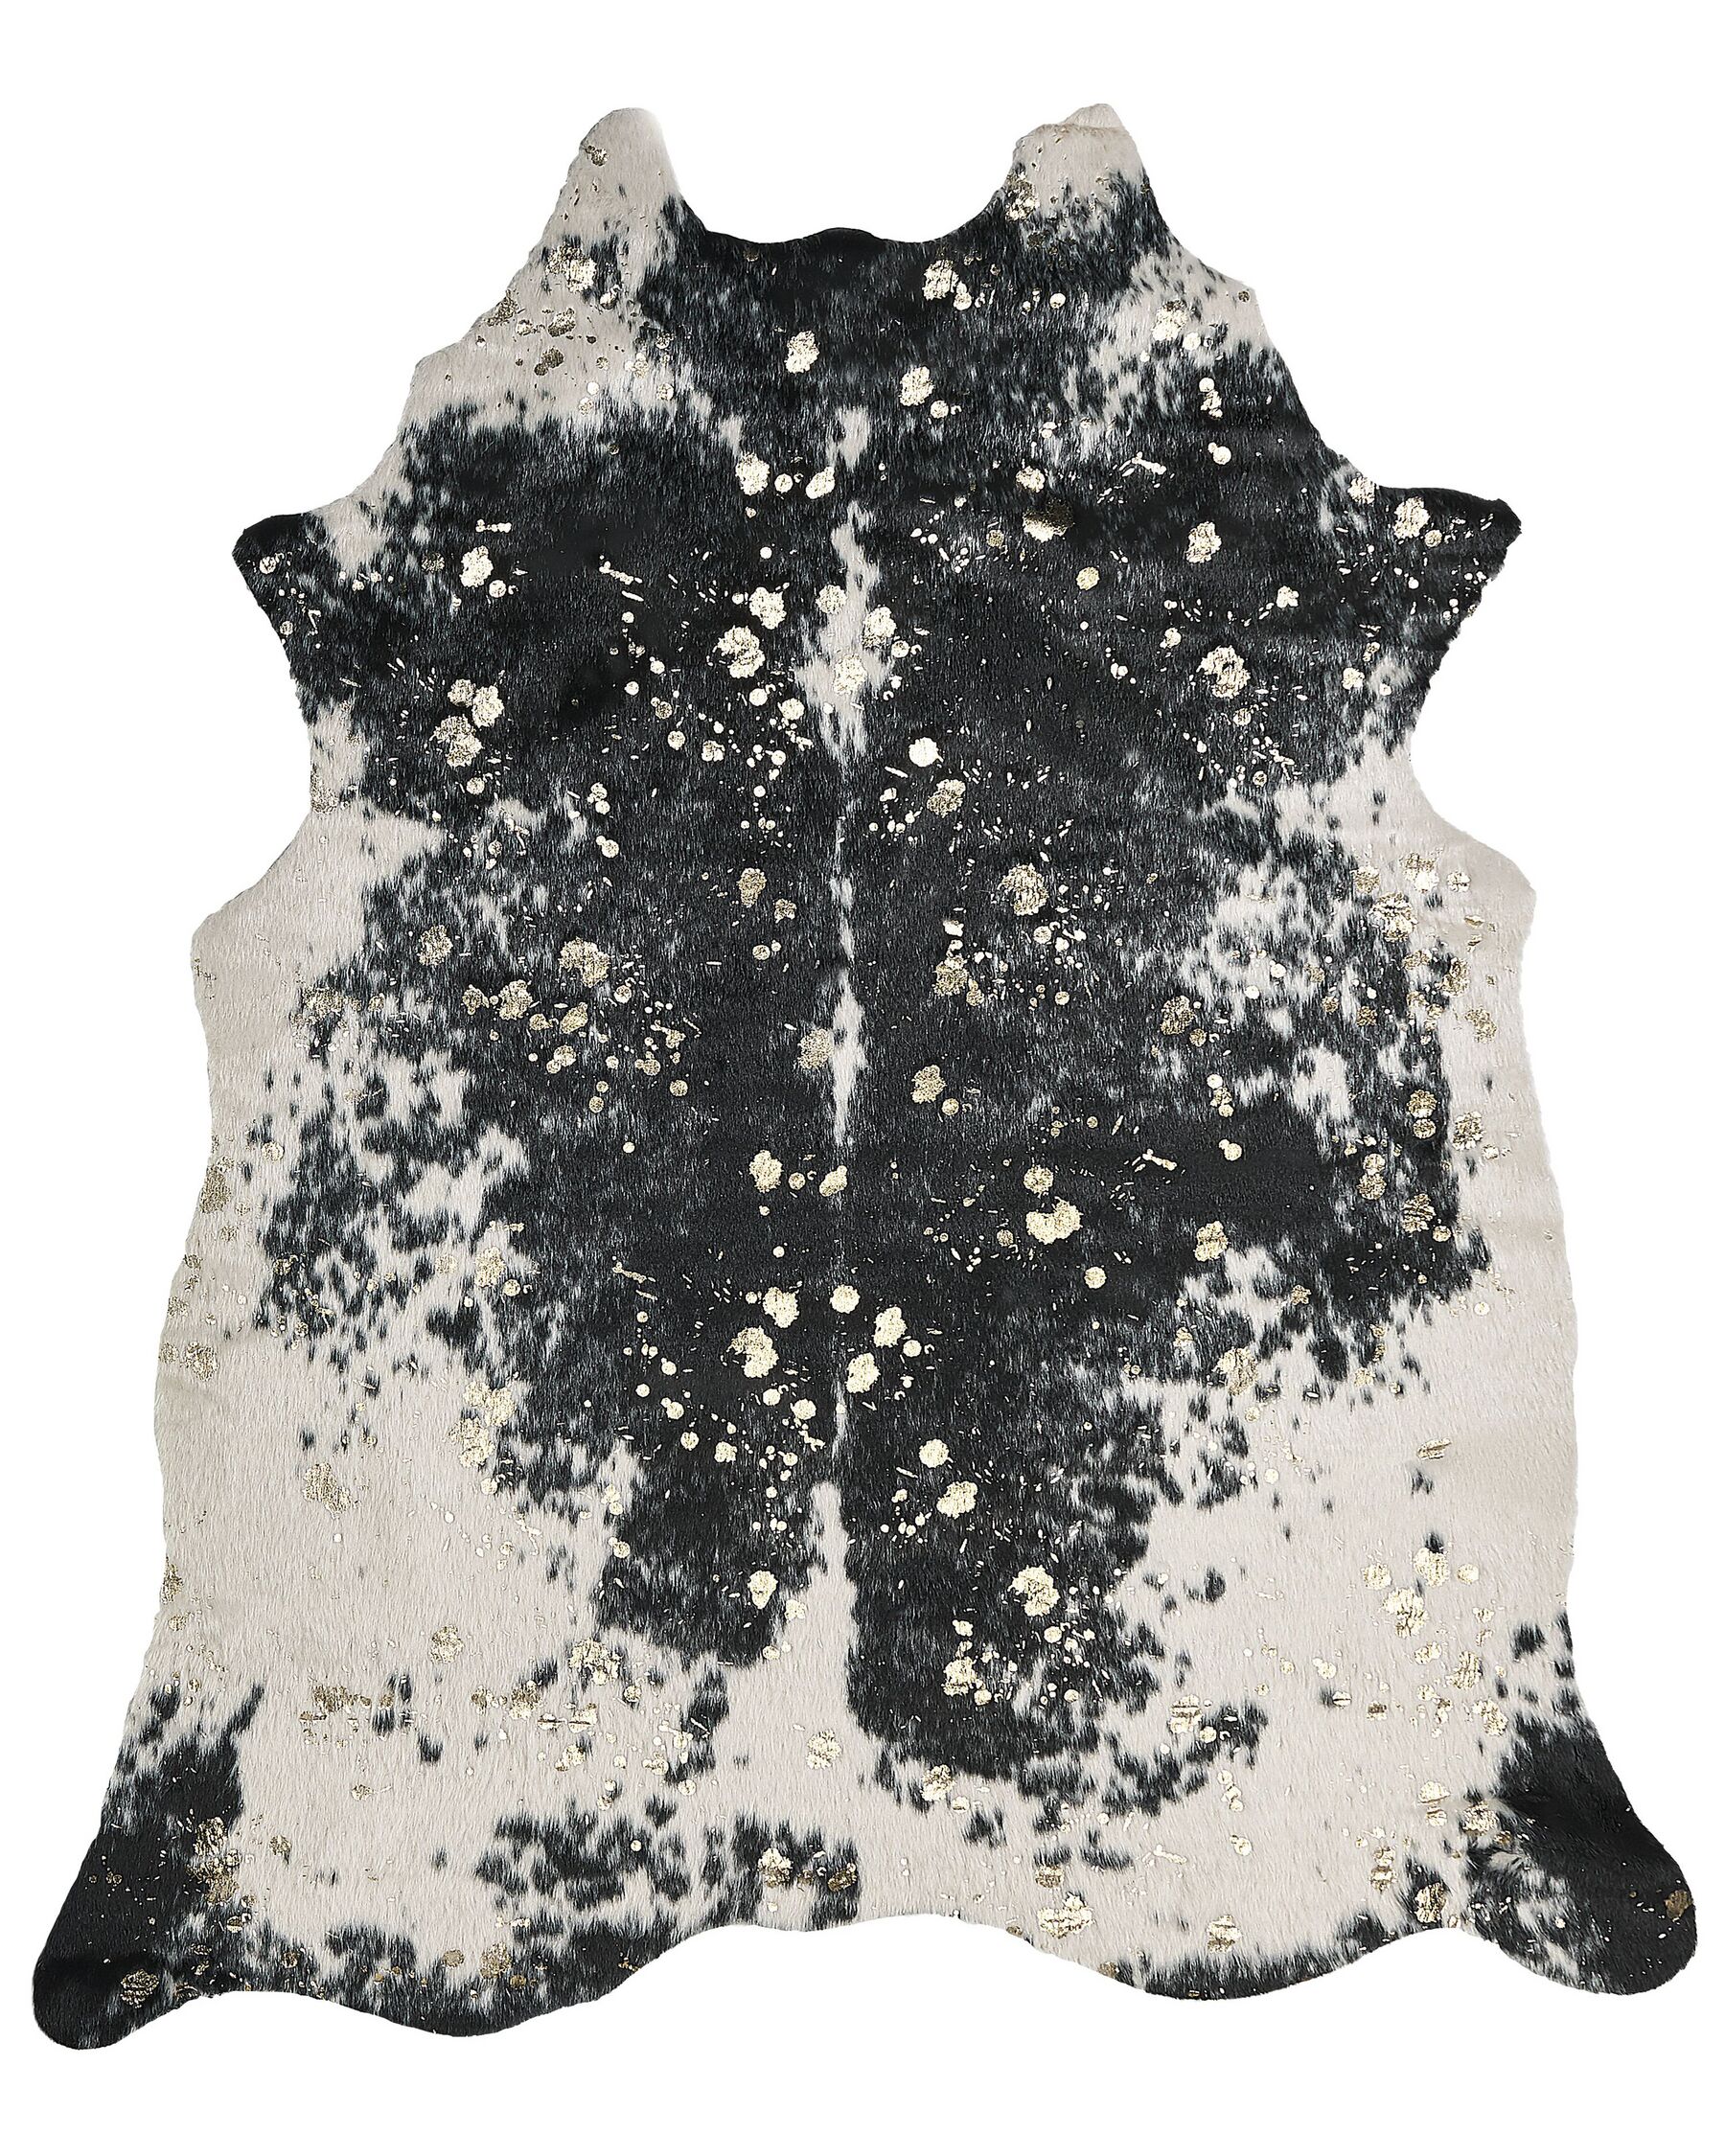 Tappeto ecopelle mucca nero macchie bianche 150 x 200 cm BOGONG_820312